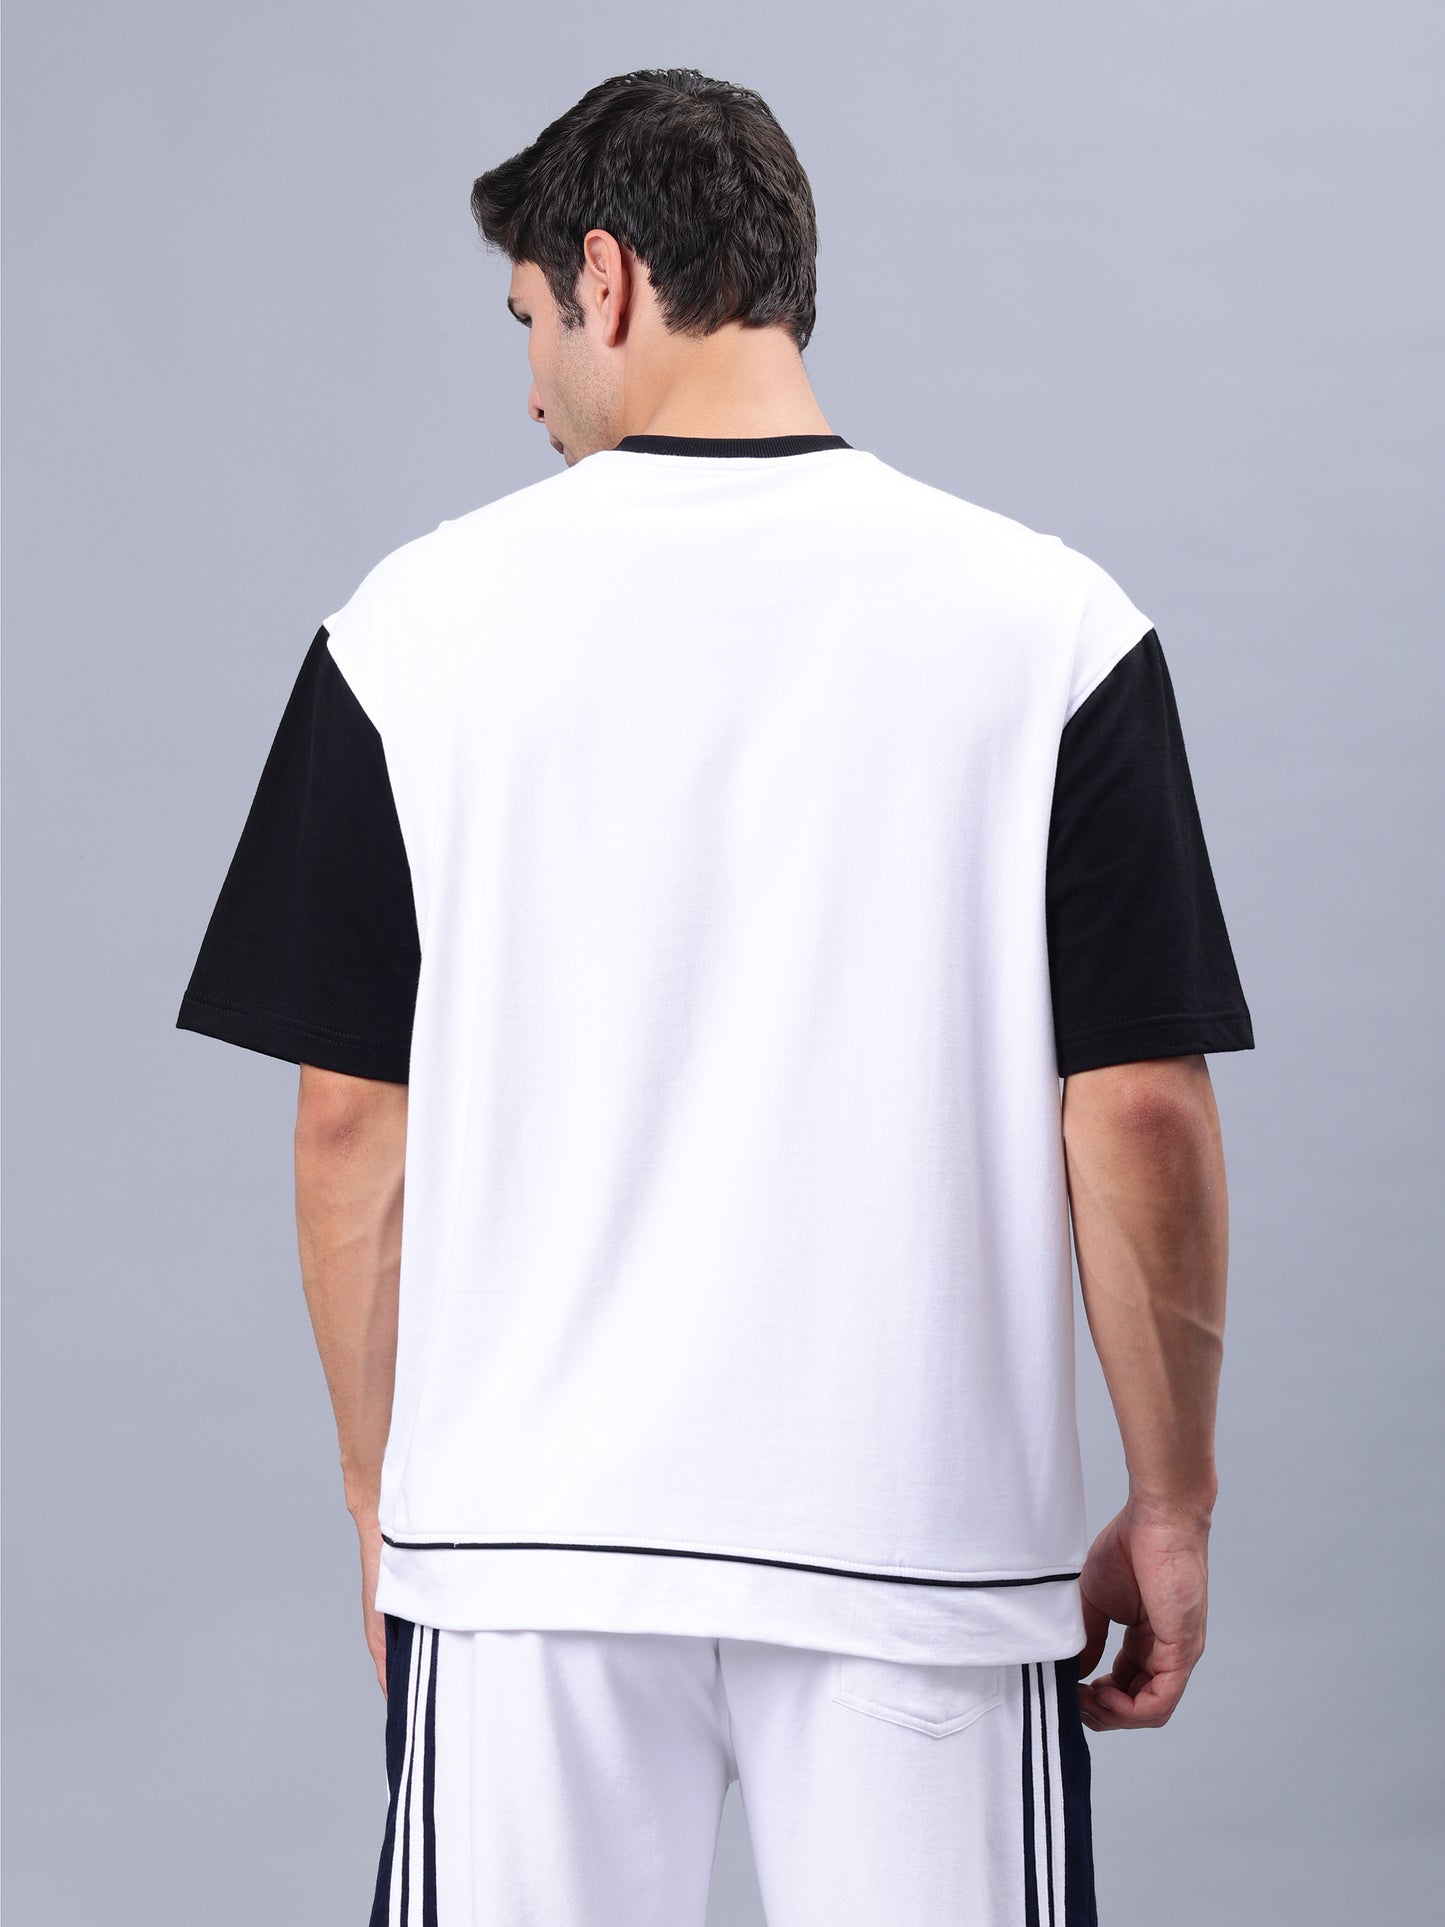 Hunk Over-Sized T-Shirt (White-Black)